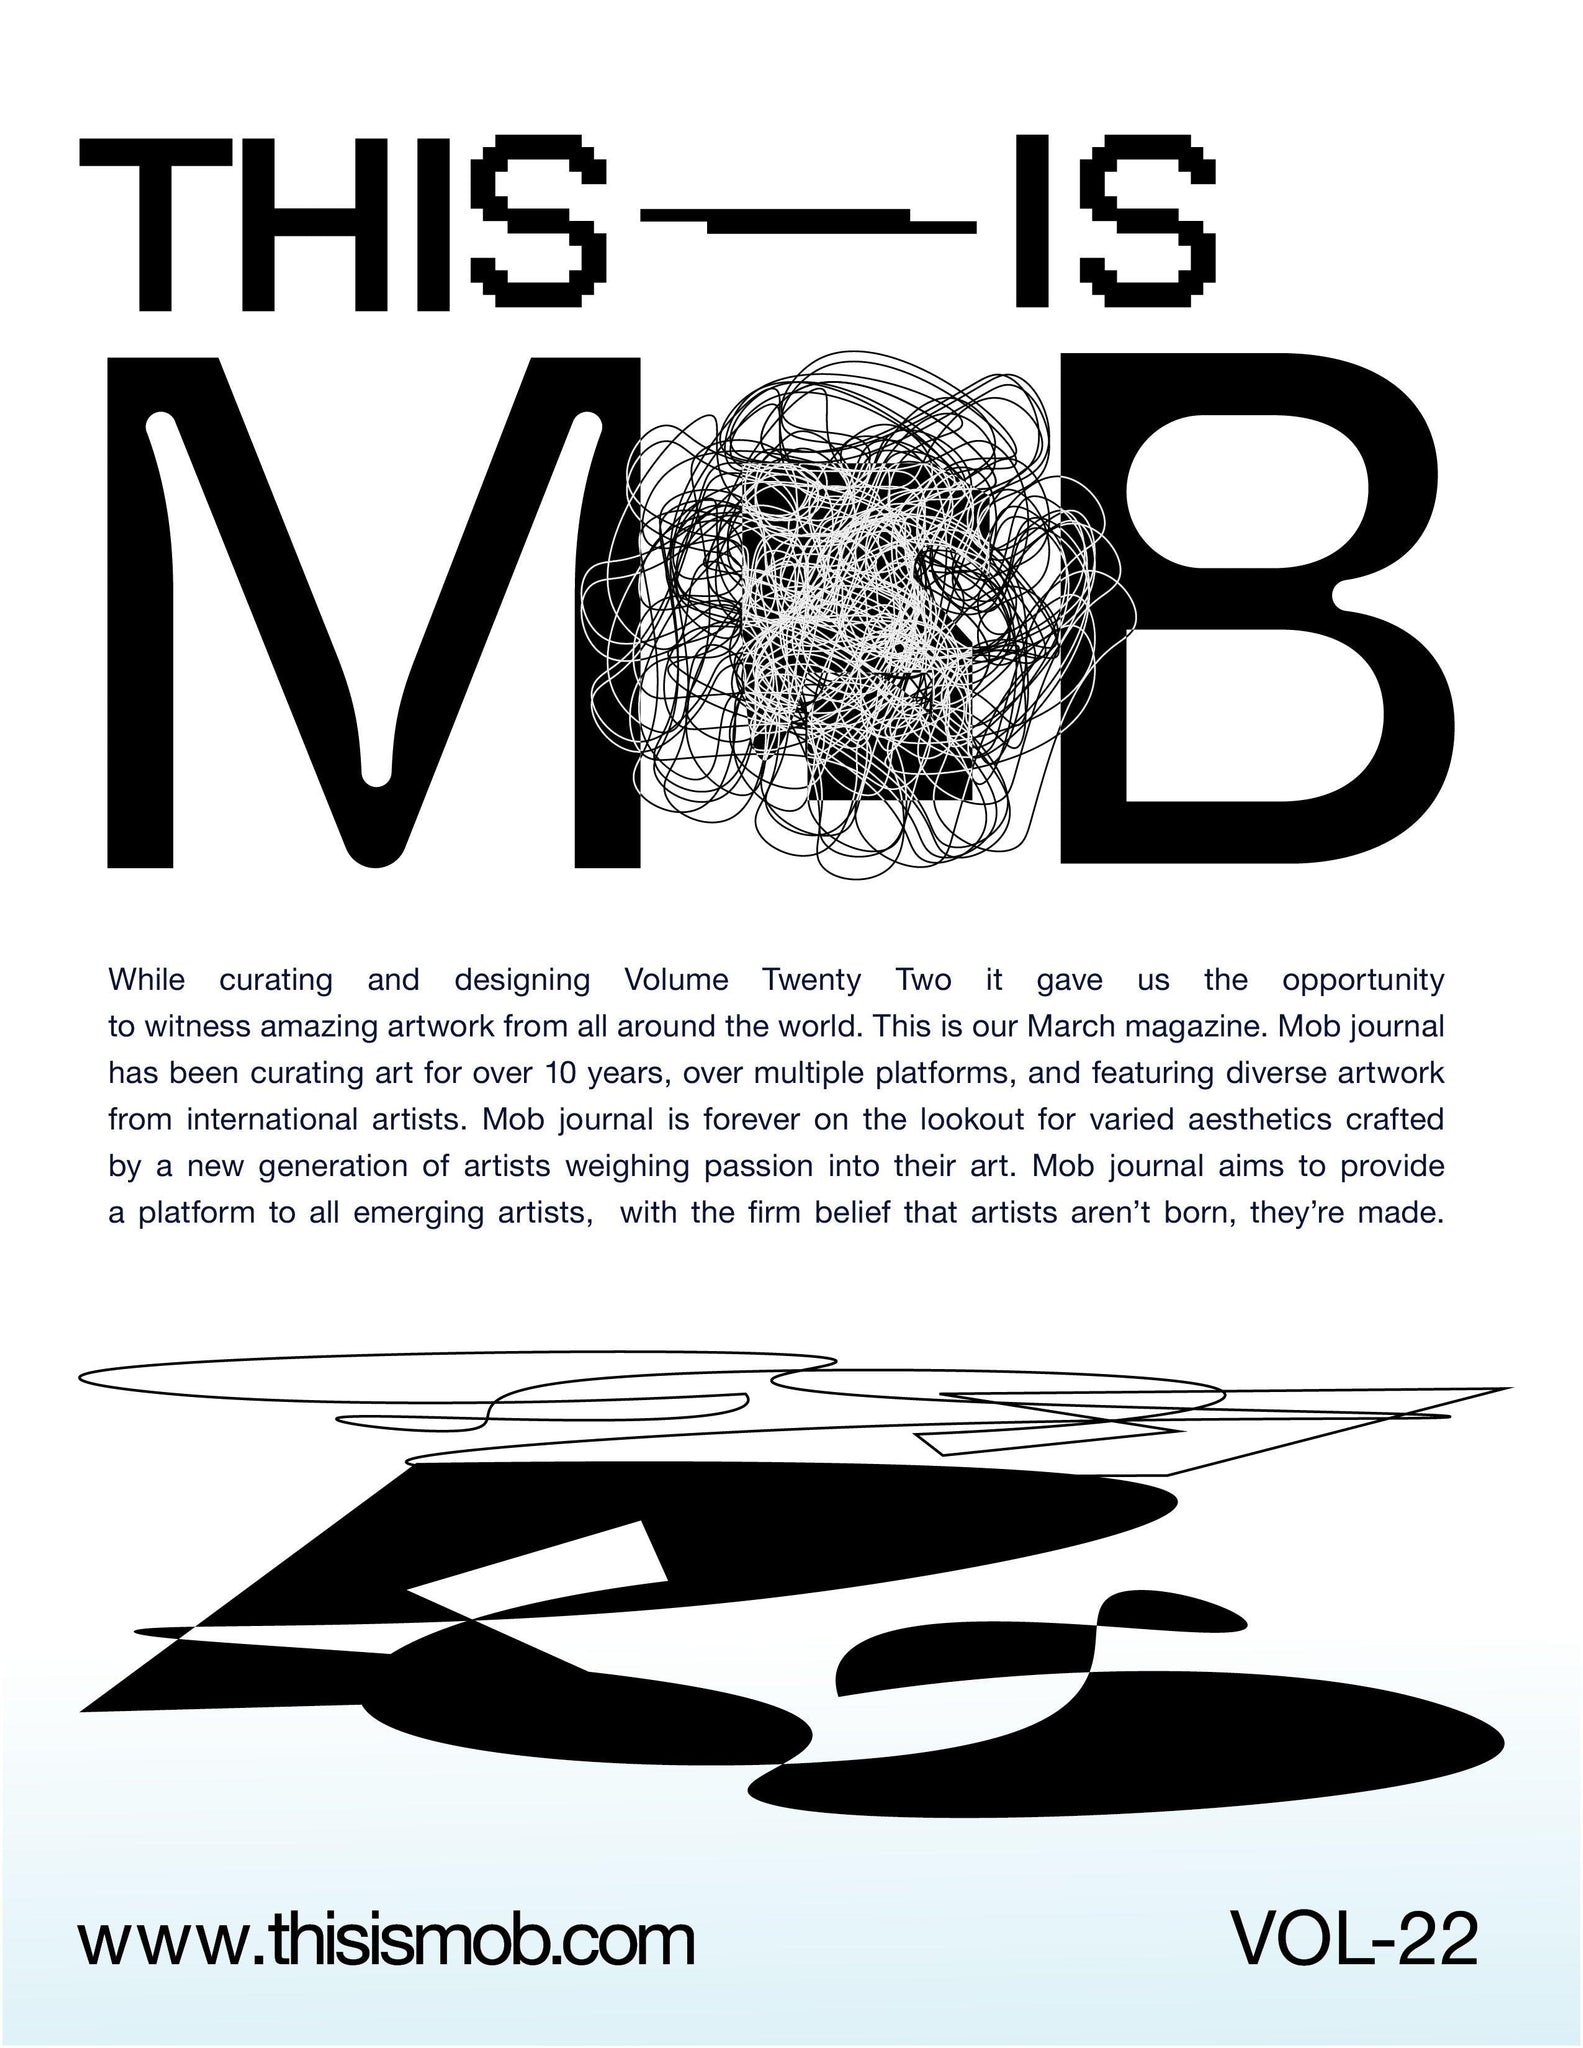 MOB JOURNAL | VOLUME TWENTY TWO | ISSUE #81 - Mob Journal